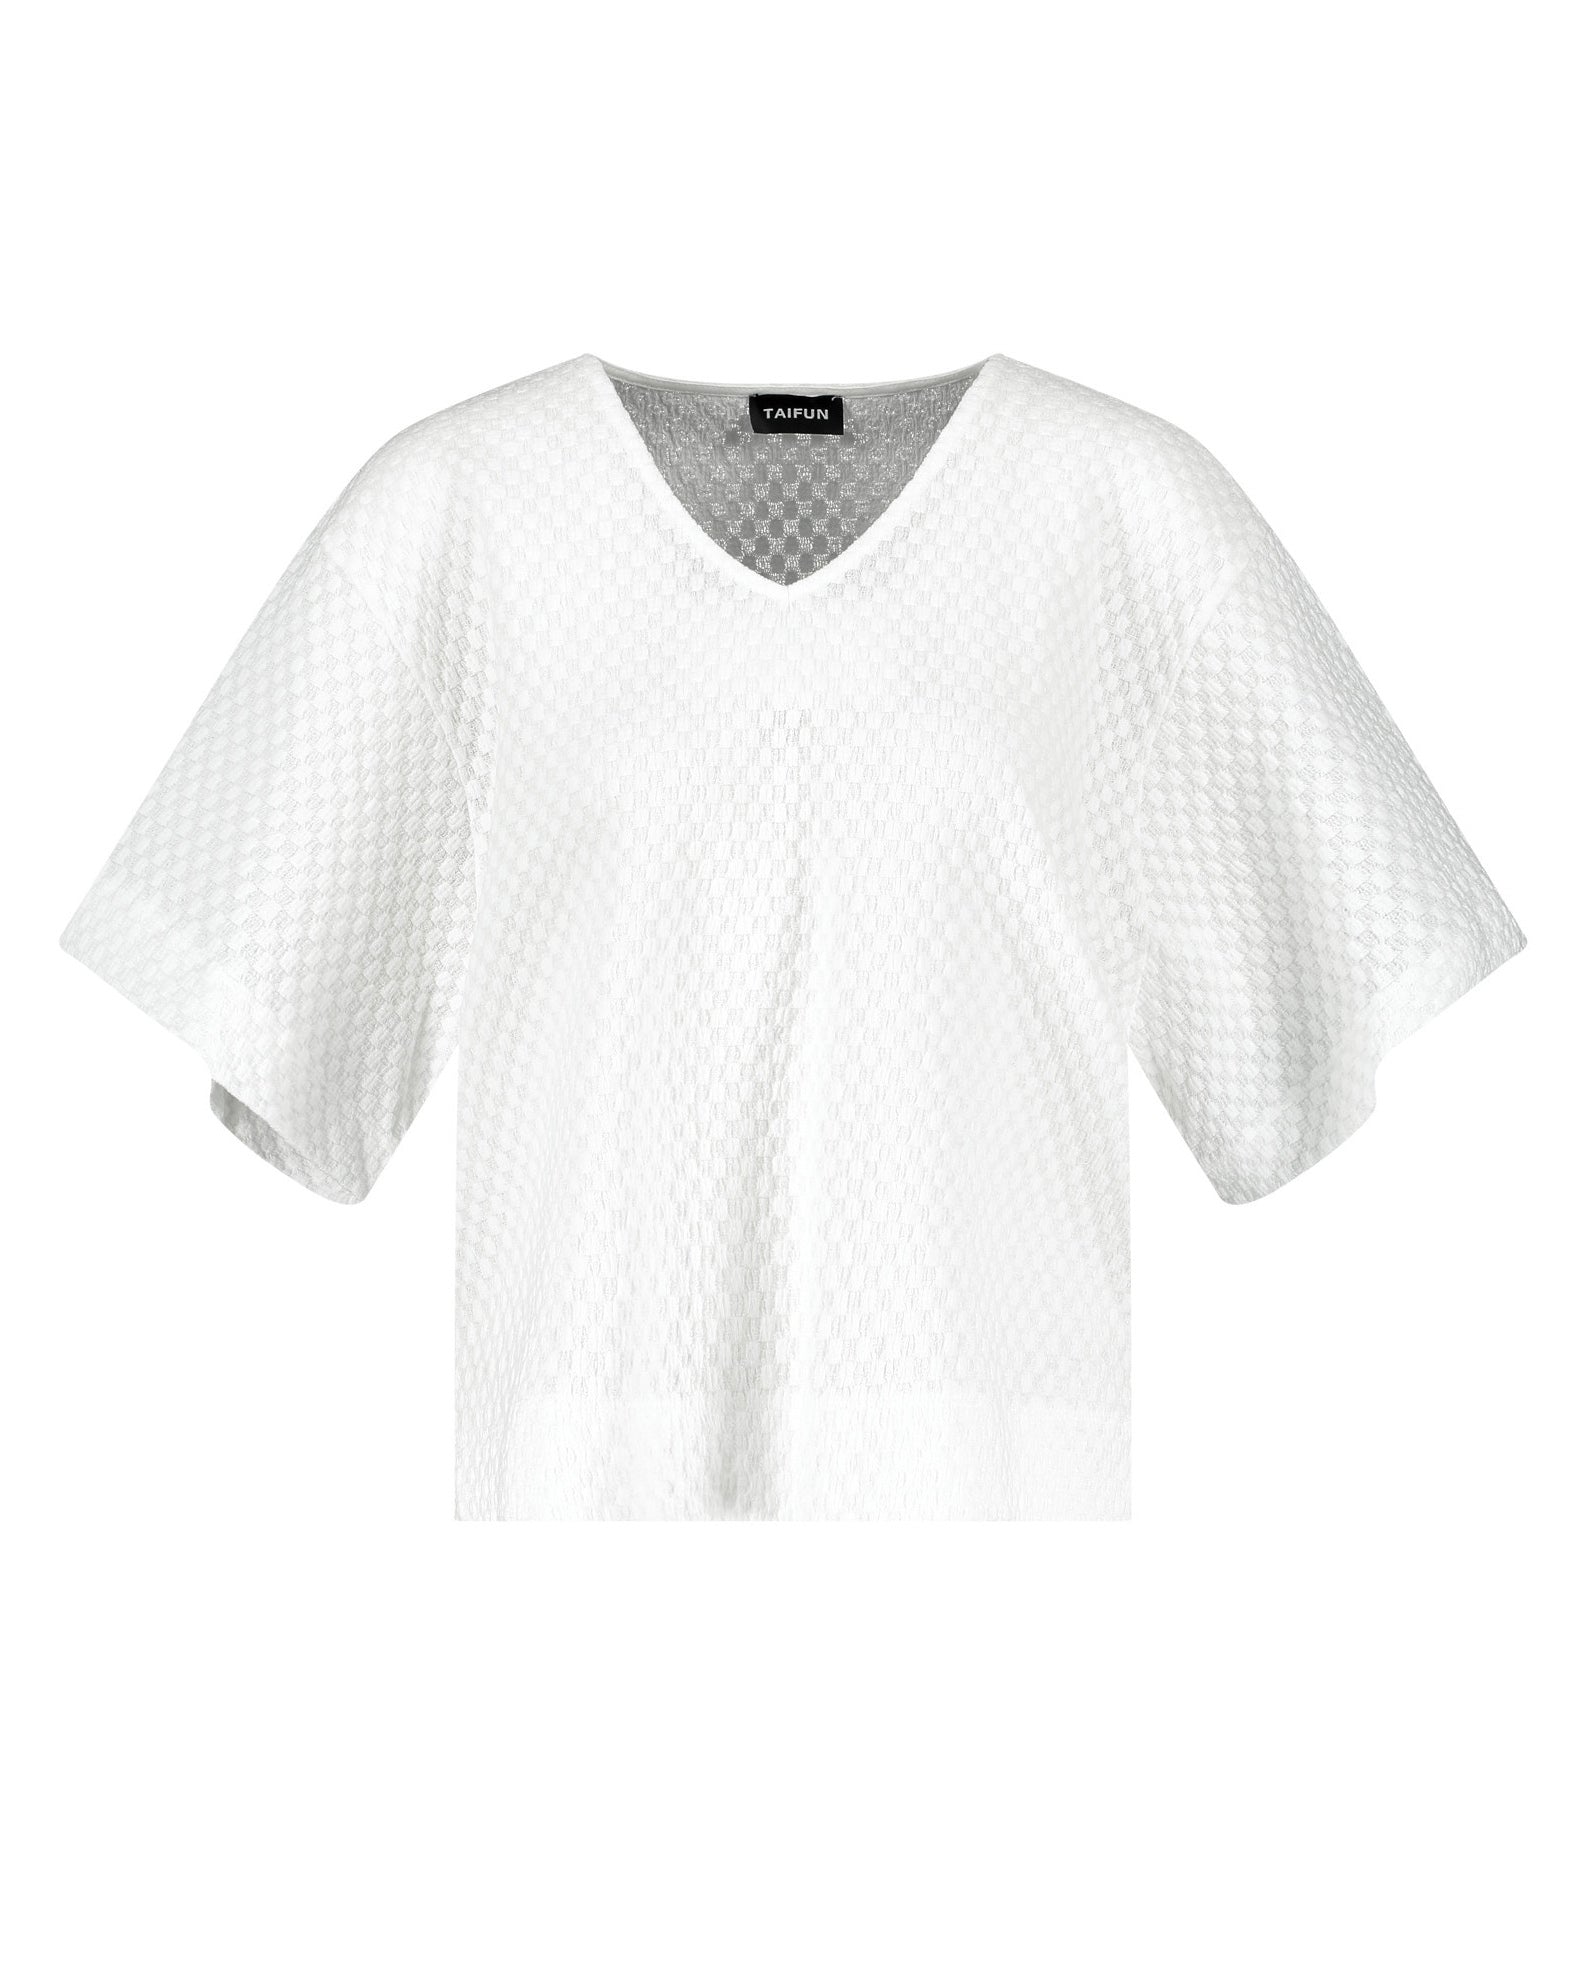 White T-Shirt 3/4 Sleeve